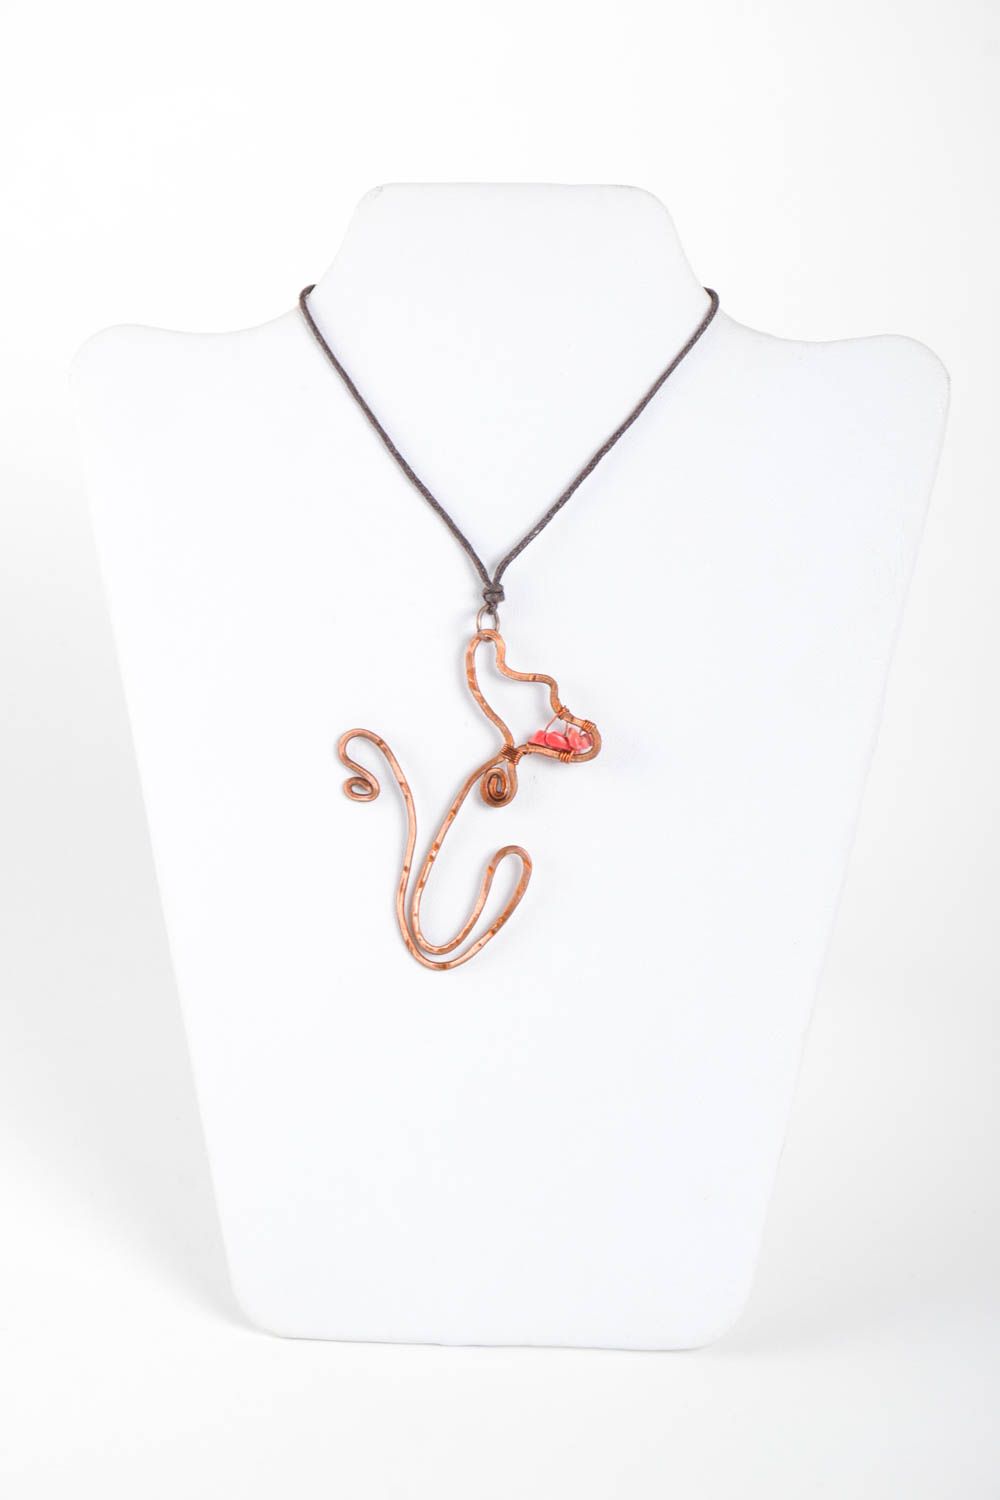 Handmade copper necklace designer pendant handmade jewelry with natural stones photo 2